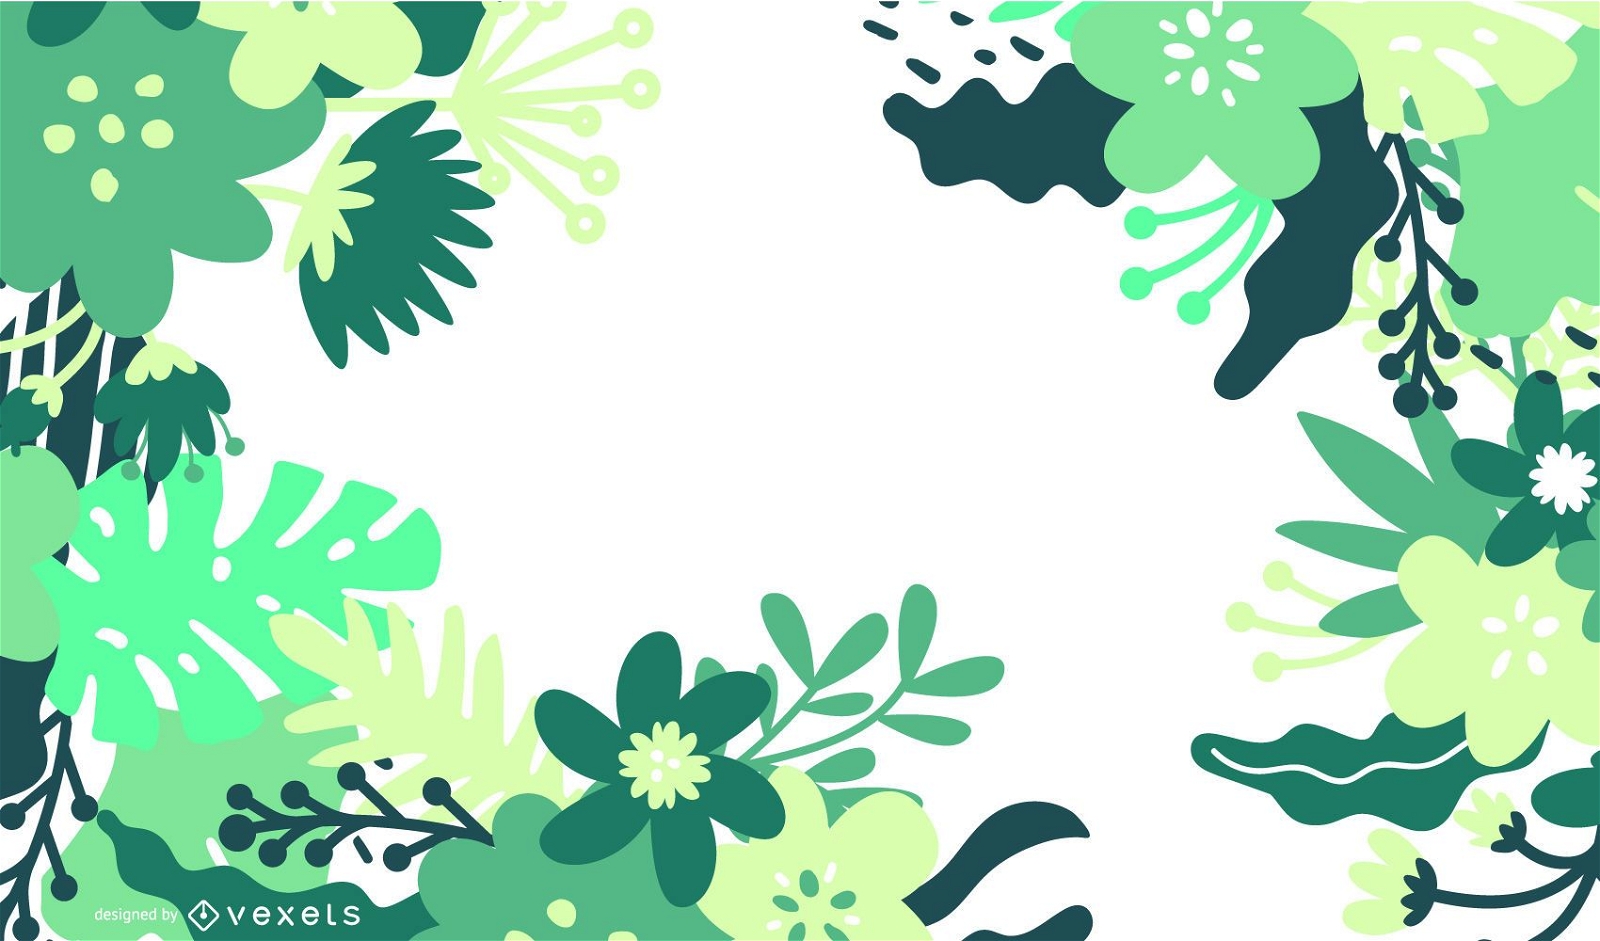 Ilustração em vetor design floral verde abstrato